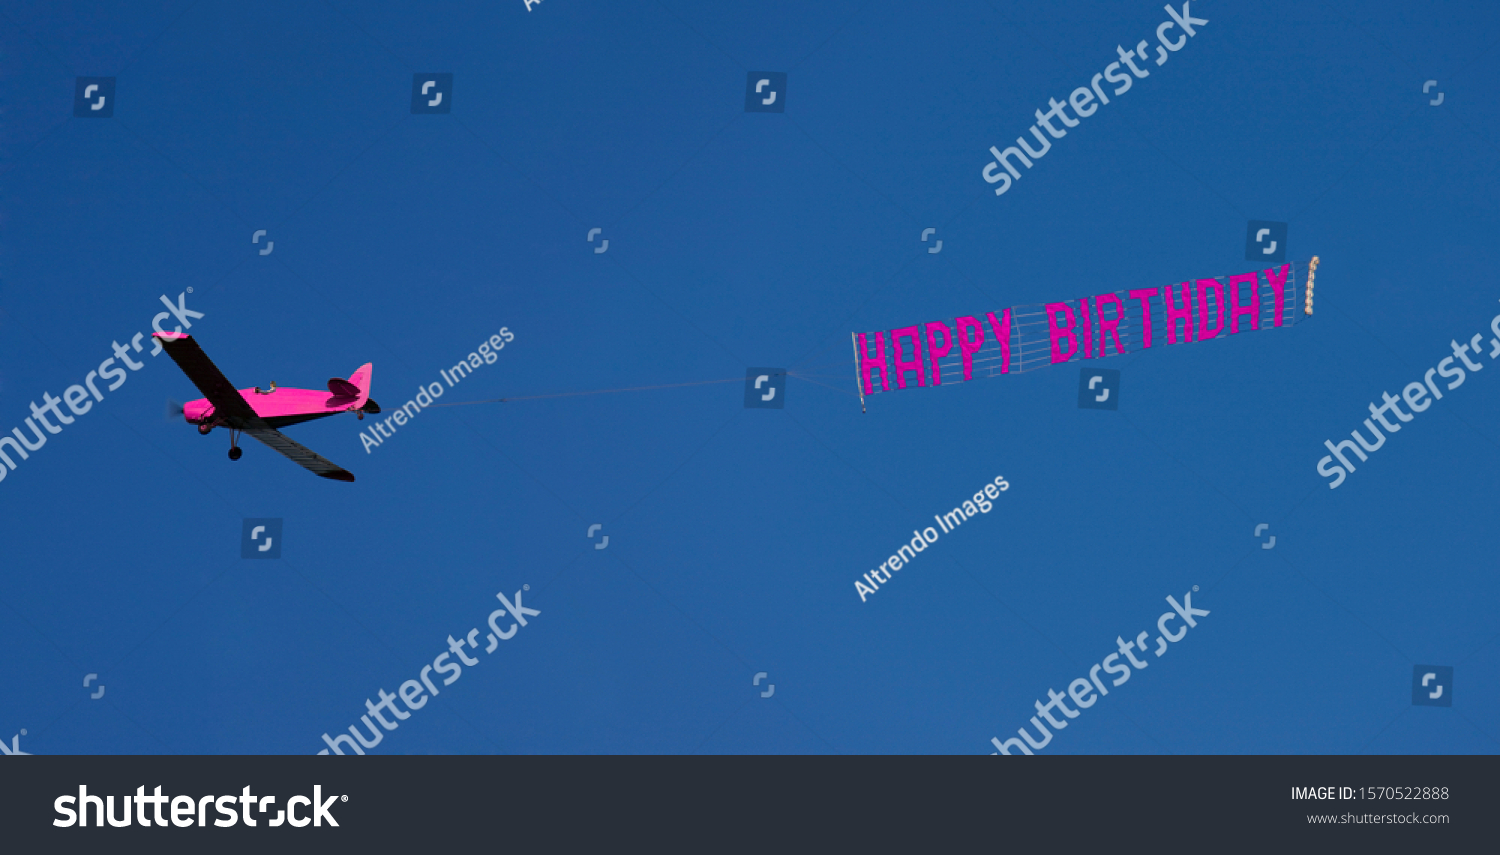 Hot pink airplane with Happy Birthday message, Miami Beach, Florida, USA #1570522888